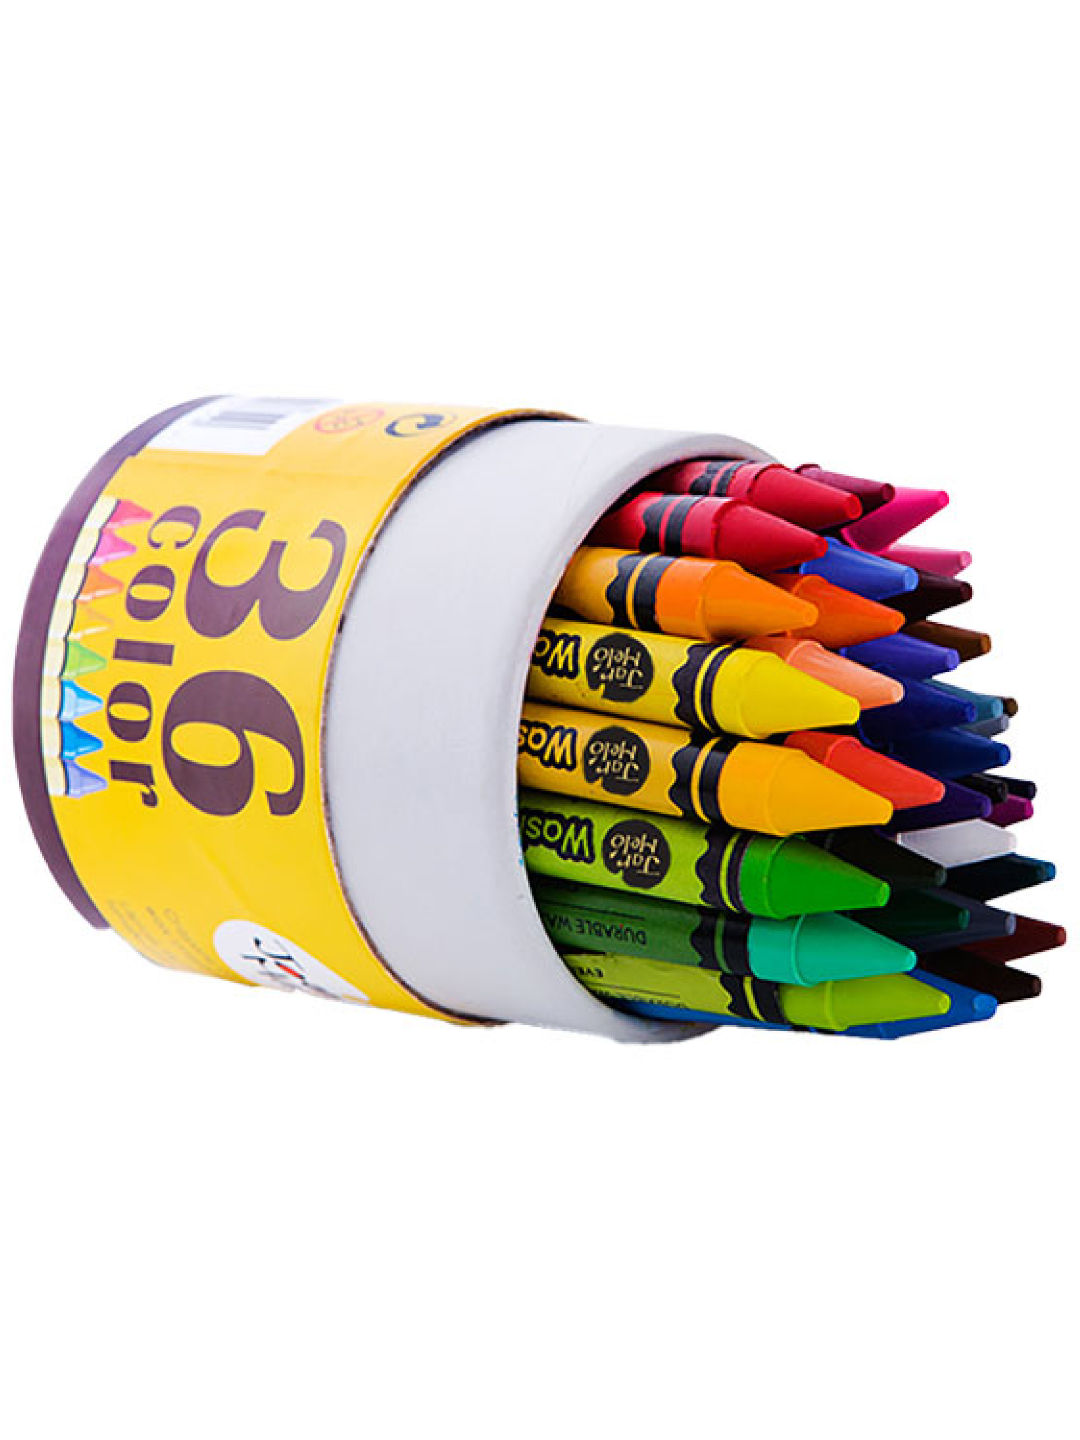 Joan Miro Washable Crayons (36 Colors) (No Color- Image 2)